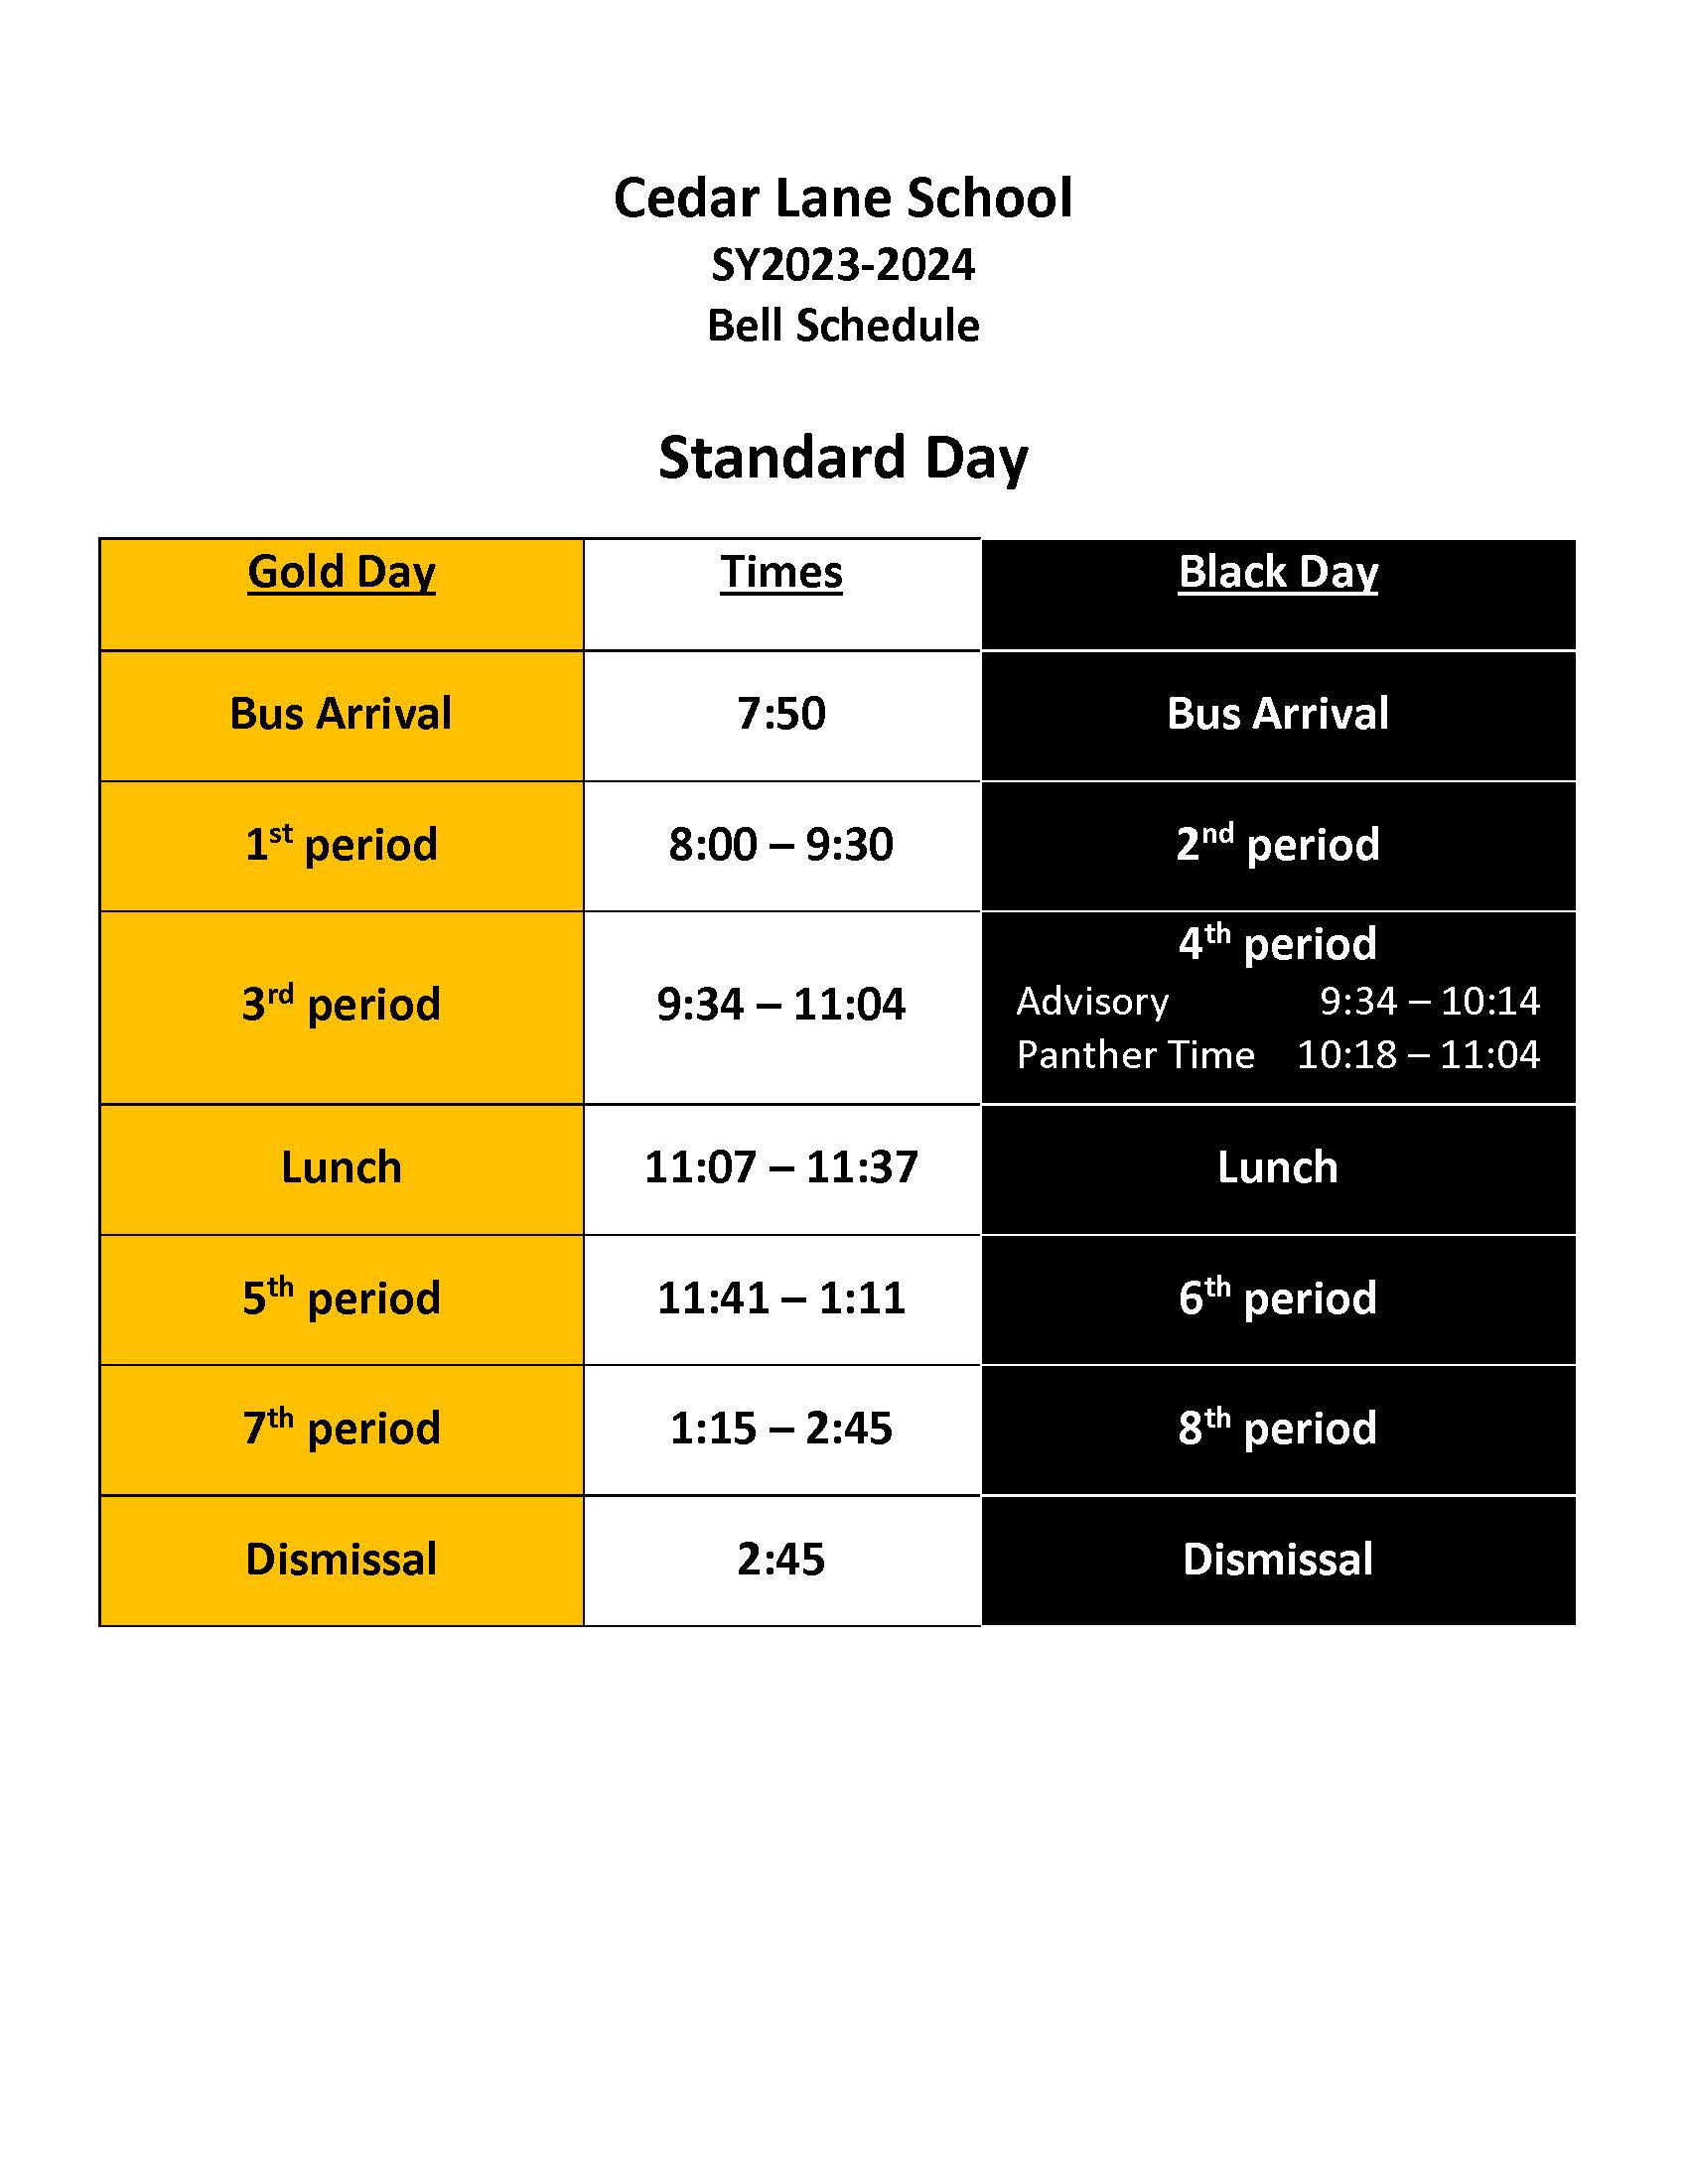 Bell Schedule Cedar Lane School